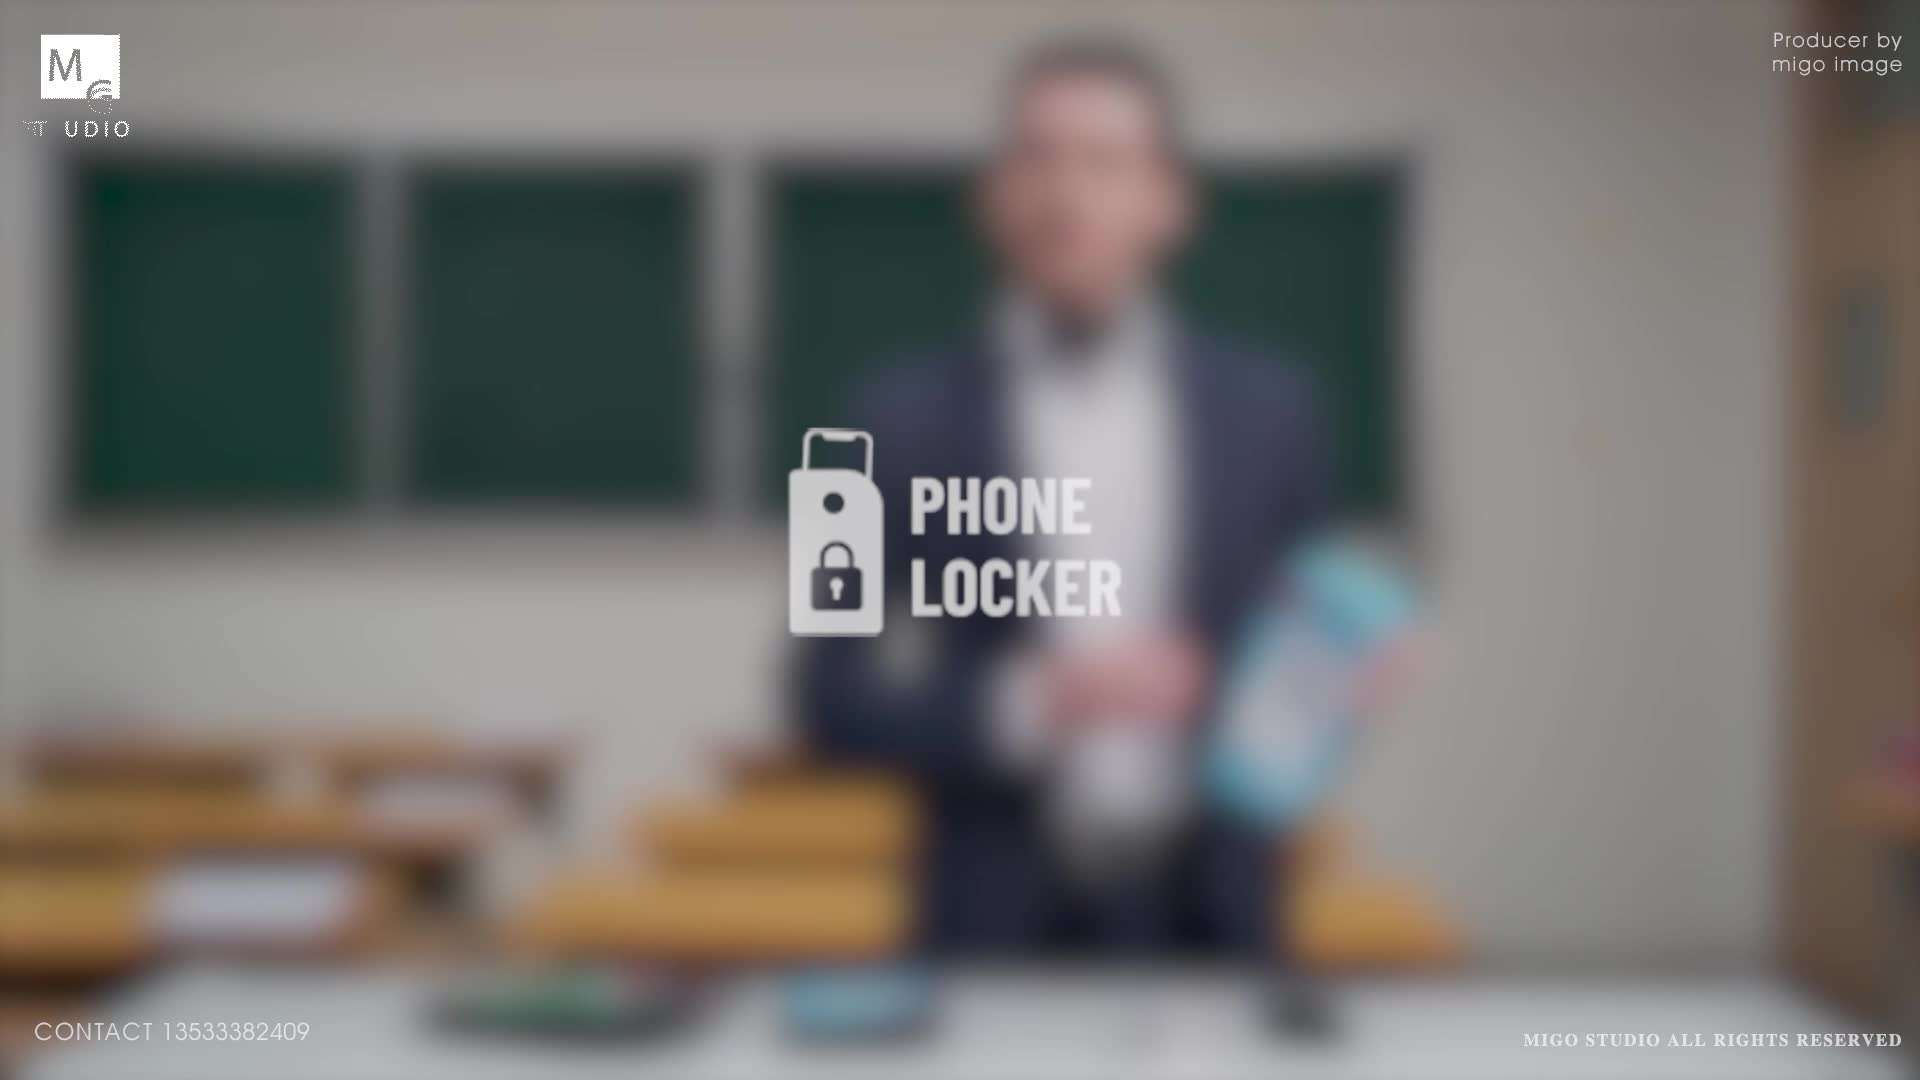 Phone locker|产品宣传片 广告视频